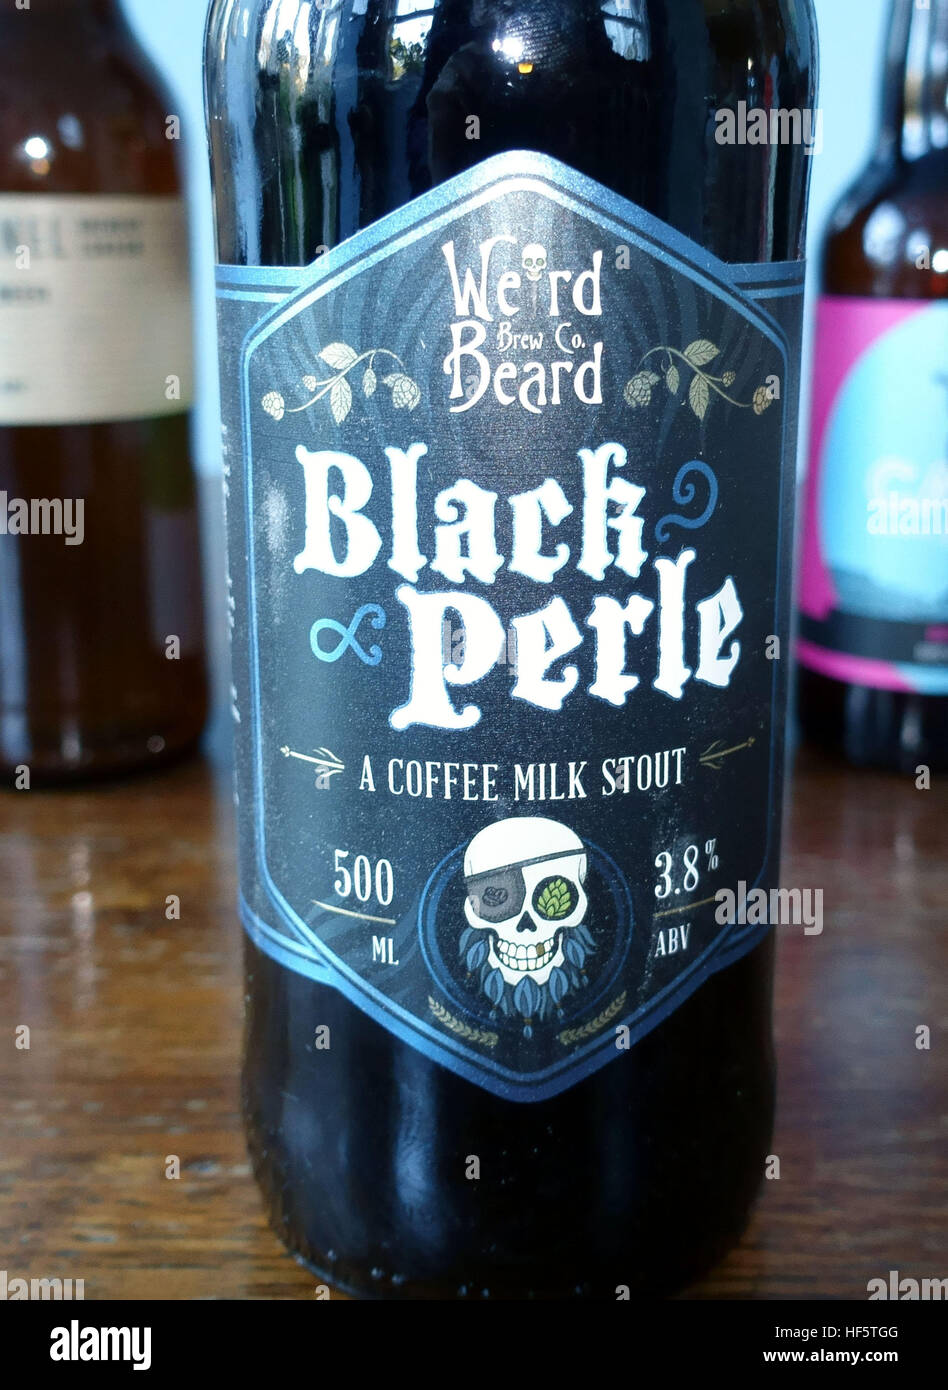 Black Perle coffee milk stout by Weird Beard Brew Company, London Stock Photo